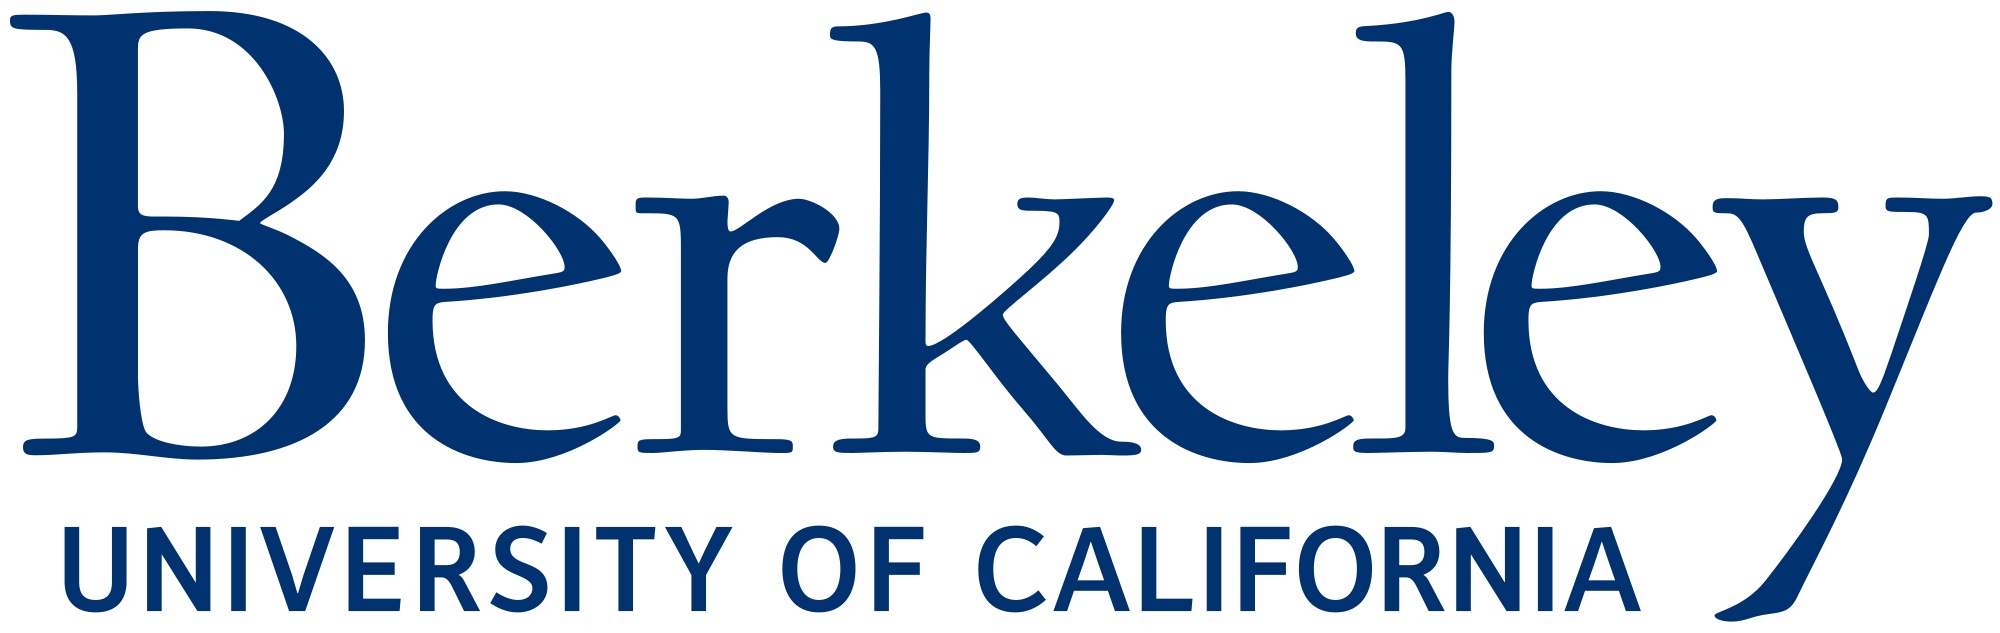 University of California, Berkeley 